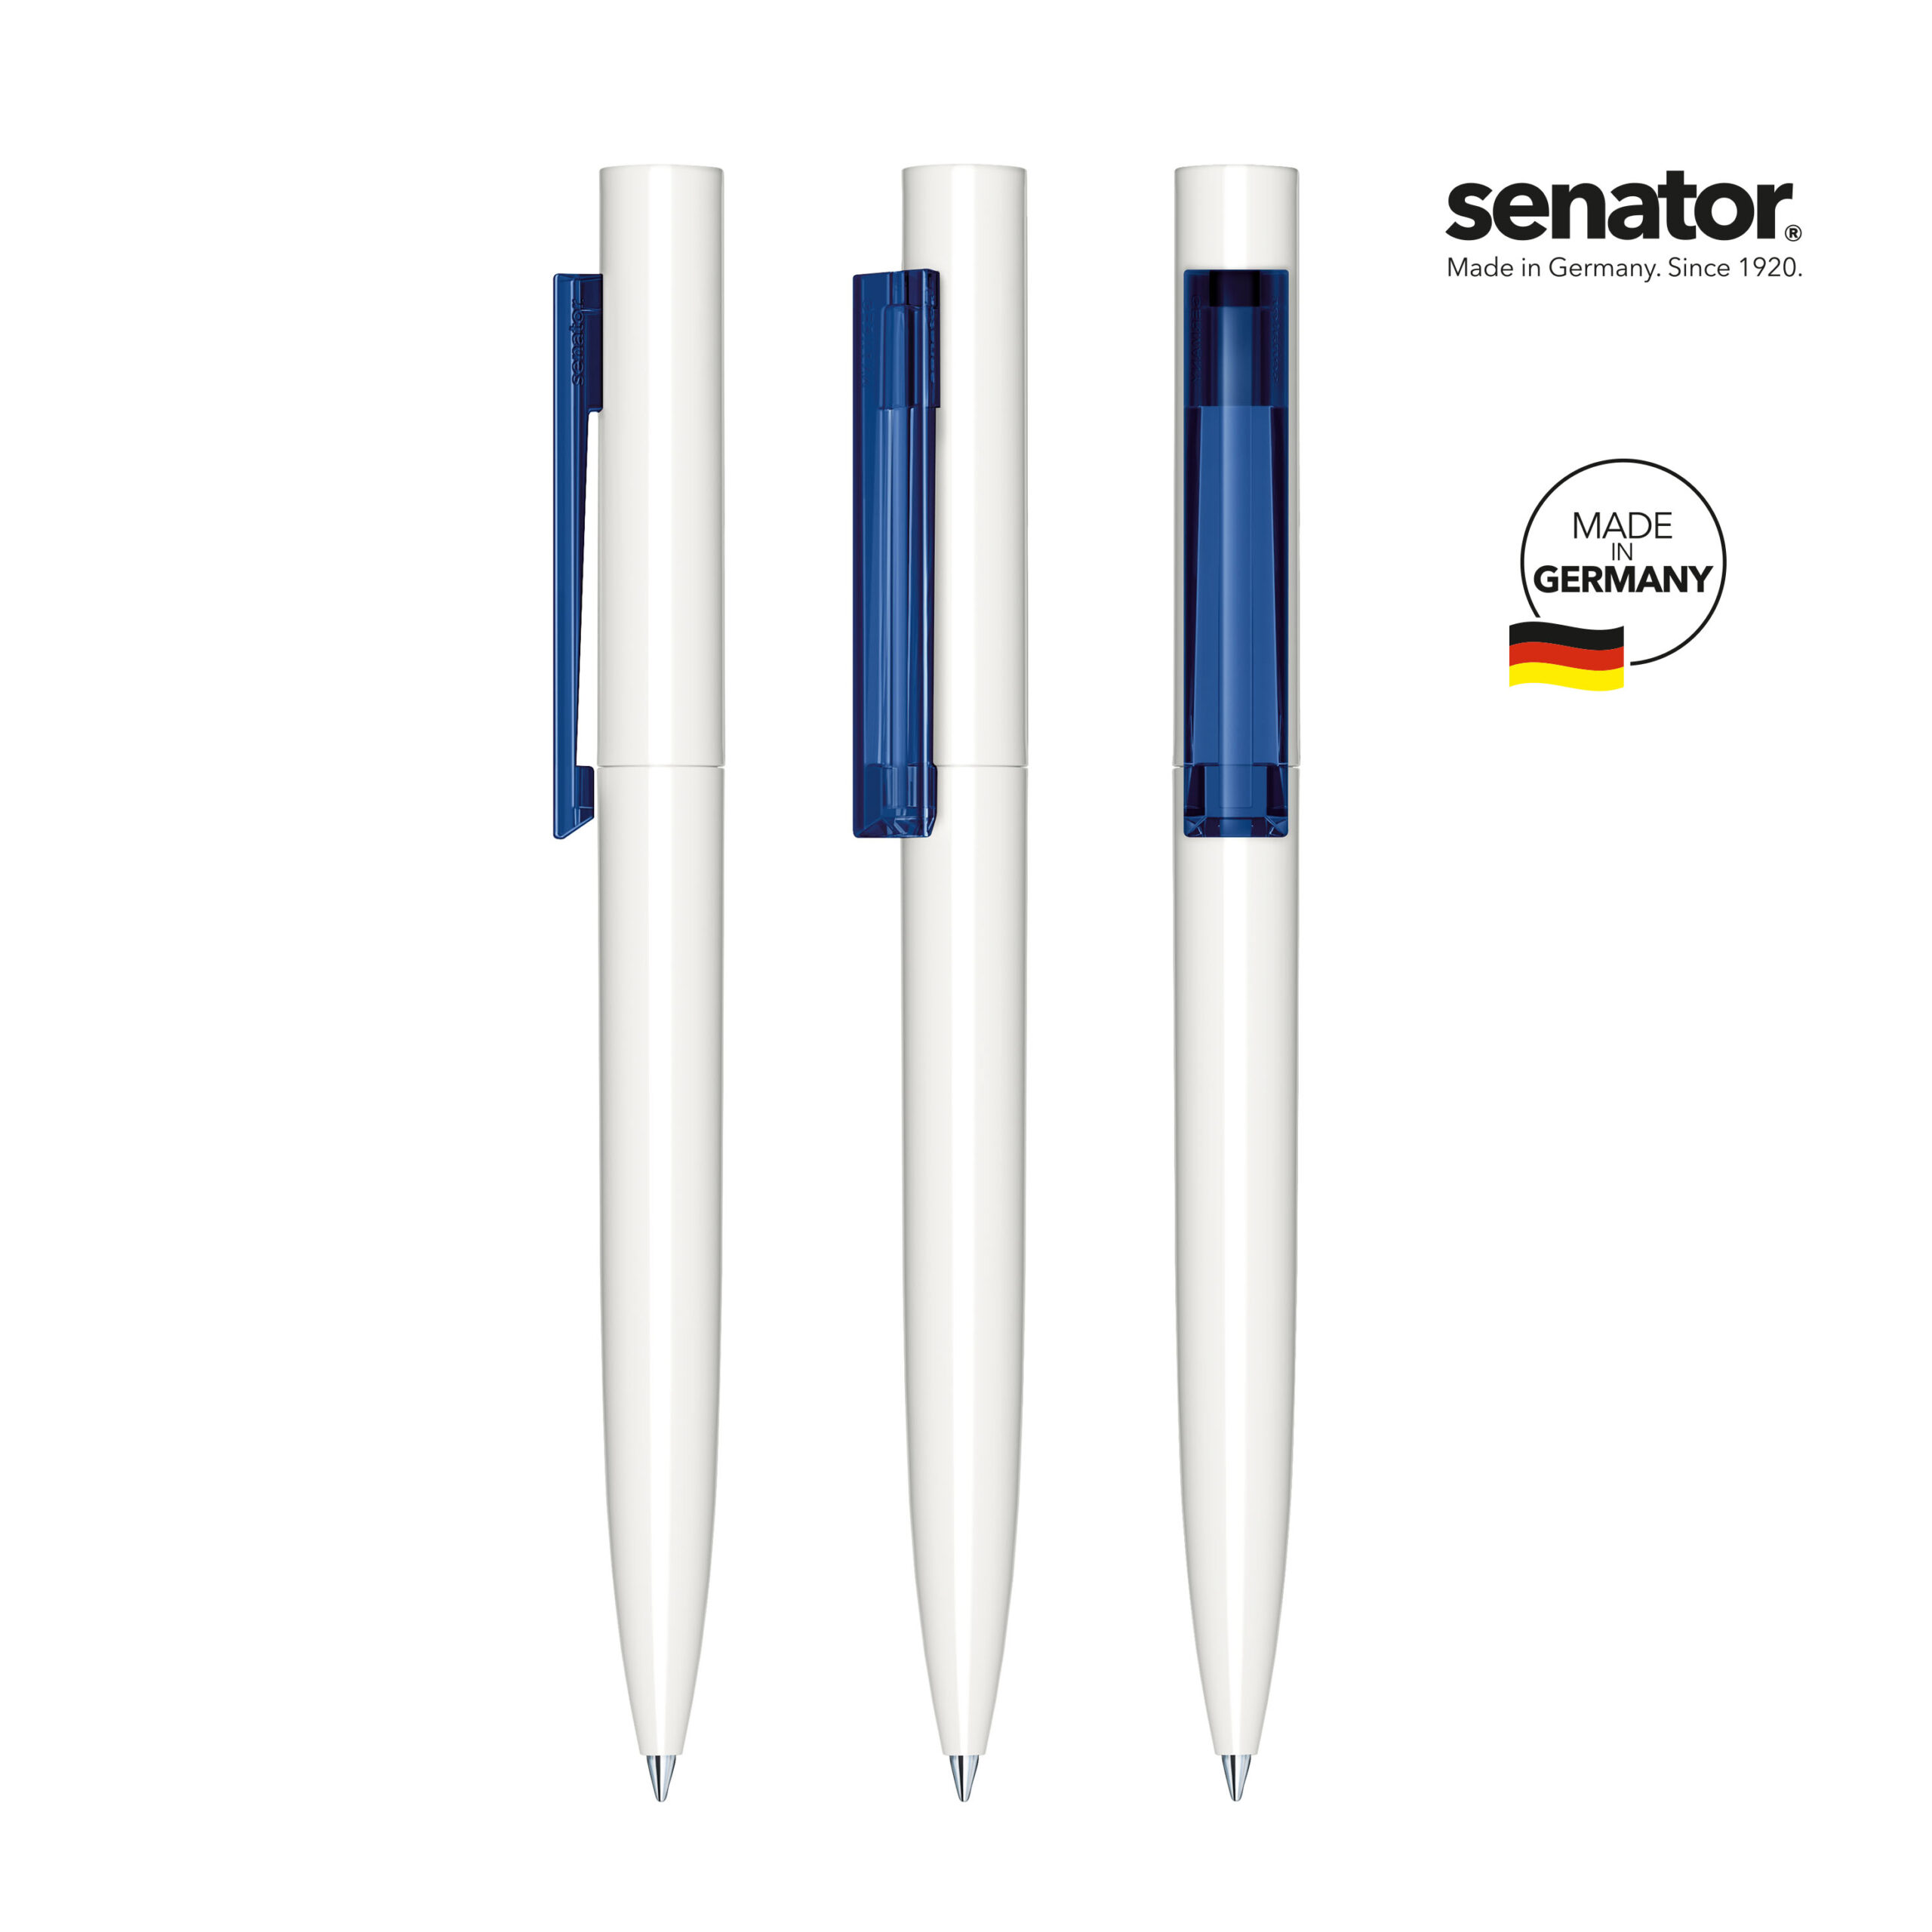 3280-senator-headliner-polished-basic-pms-2757-5-p